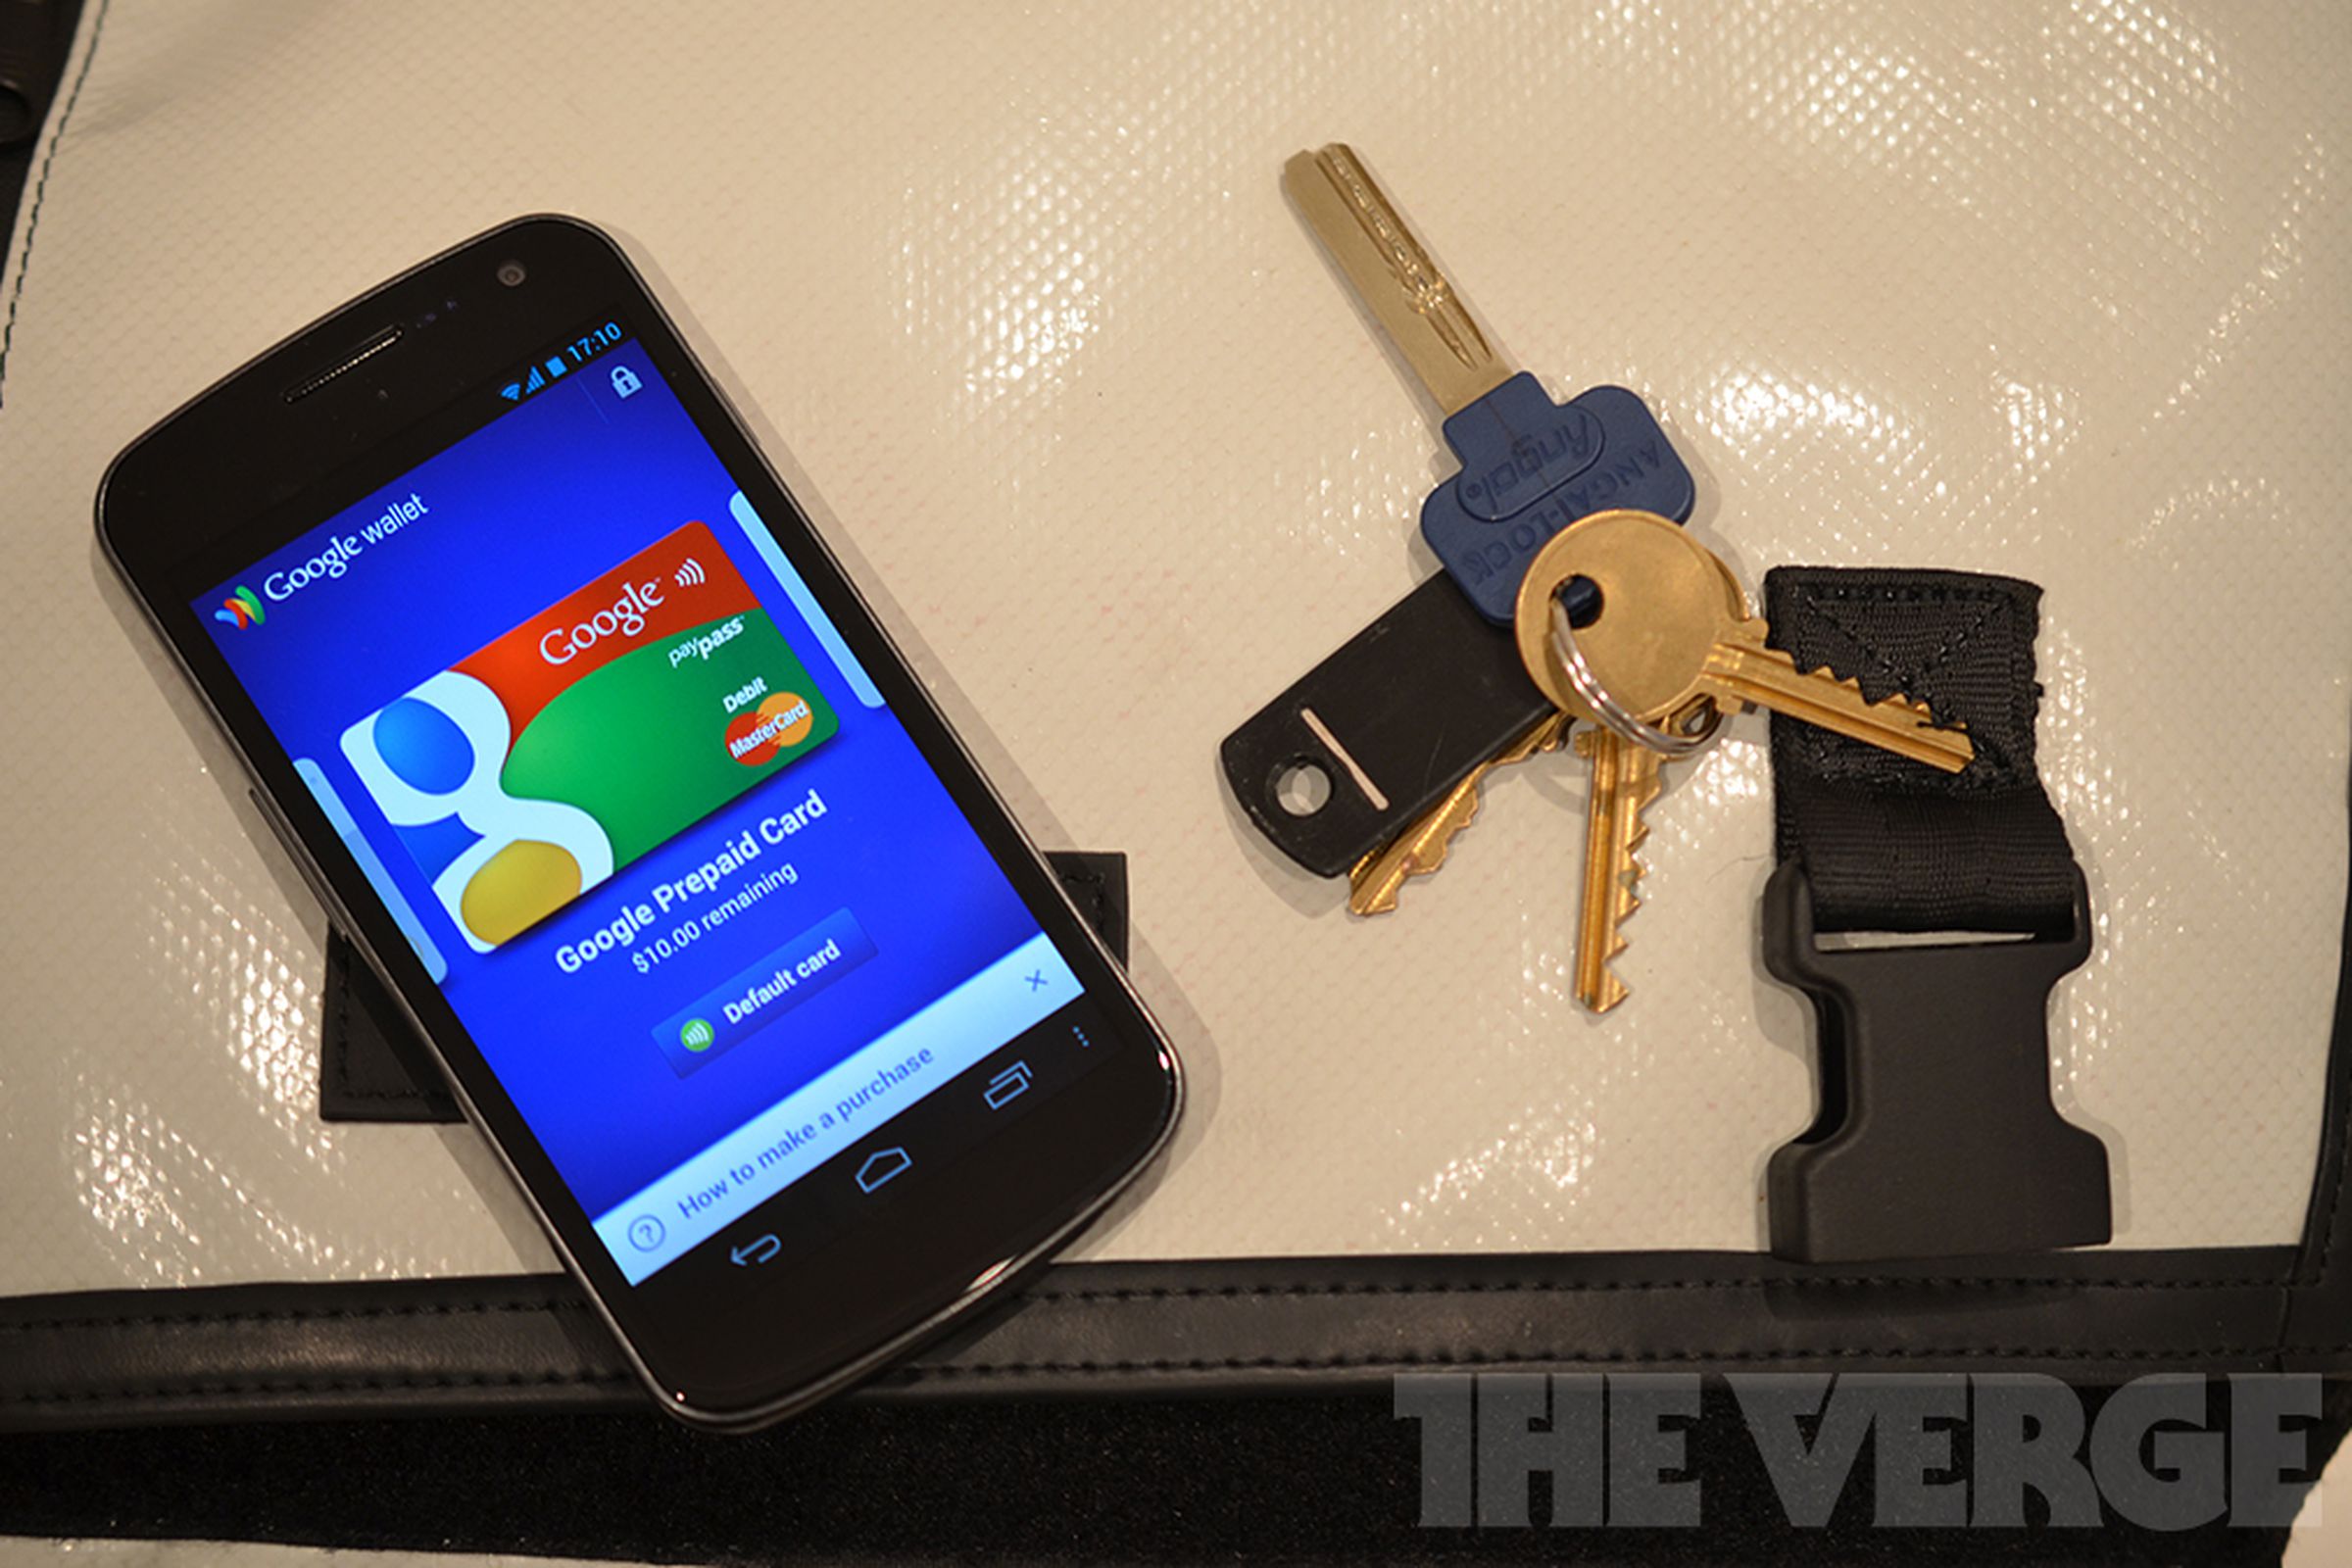 Google Wallet keys security